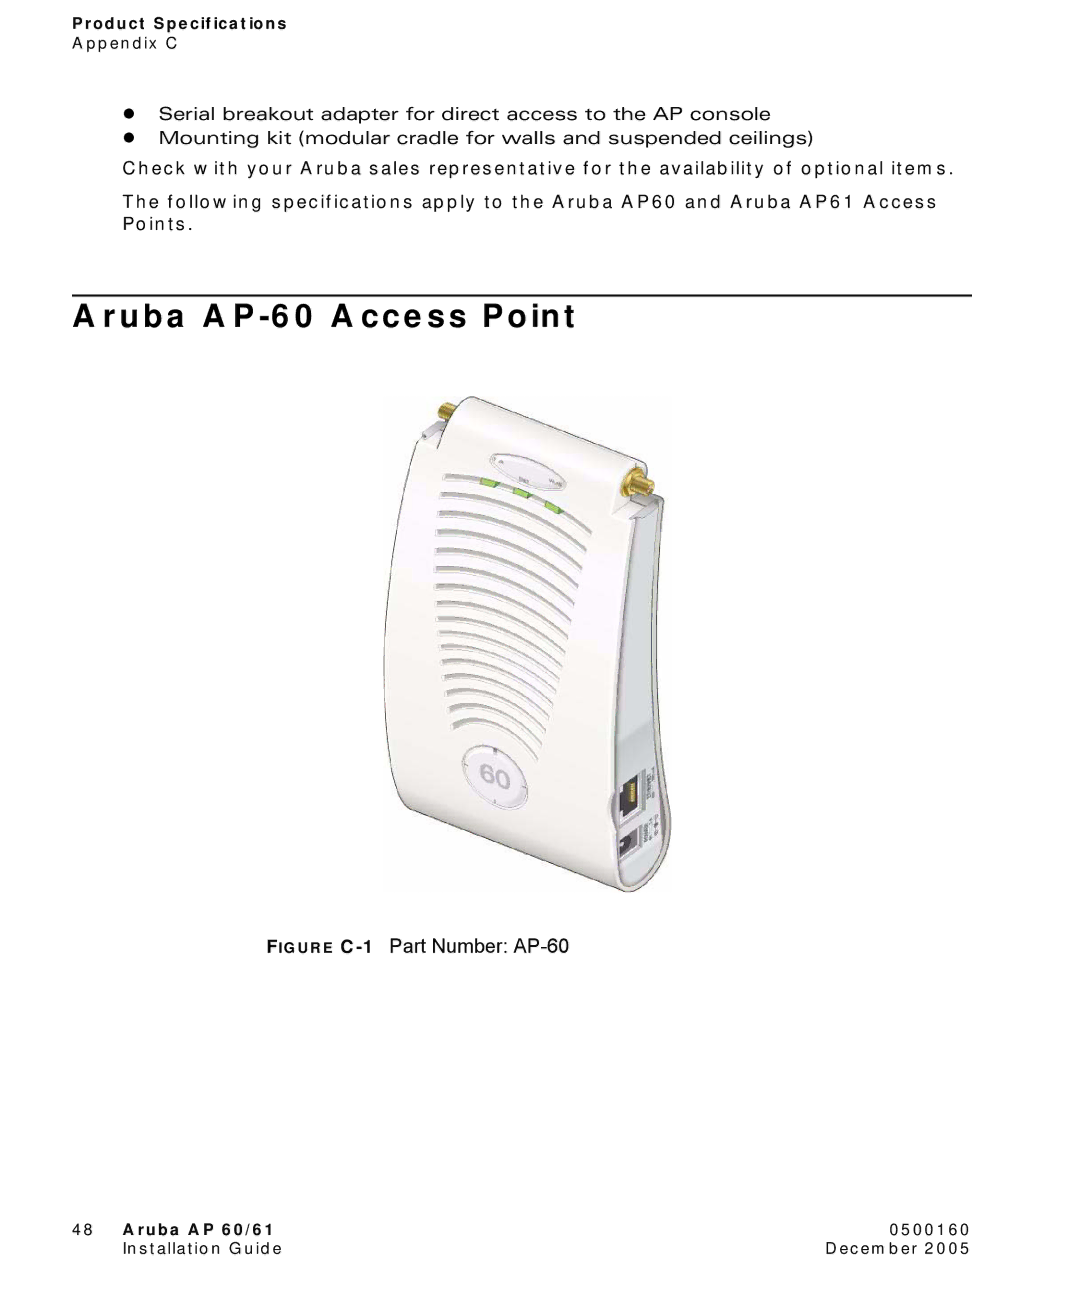 Aruba Networks Aruba AP 60/61 manual Aruba AP-60 Access Point, Figure C-1Part Number AP-60 